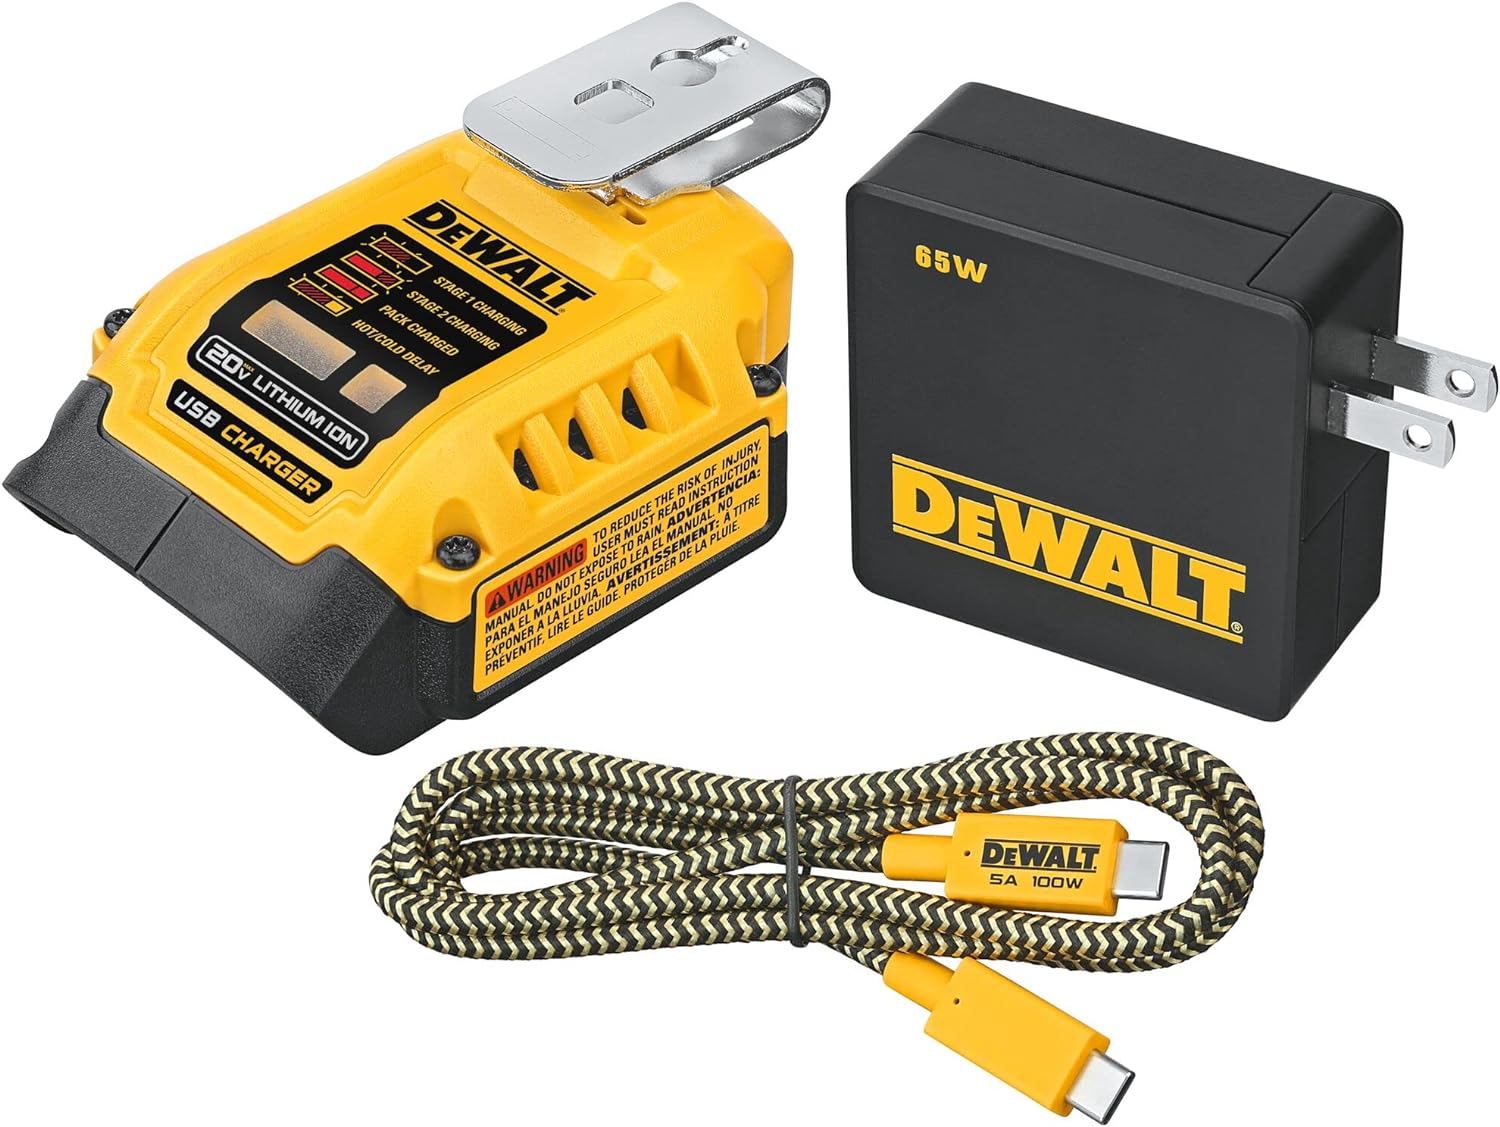 Dewalt DCB094K 20V MAX FLEXVOLT 5 Amp USB Charging Kit $65.88